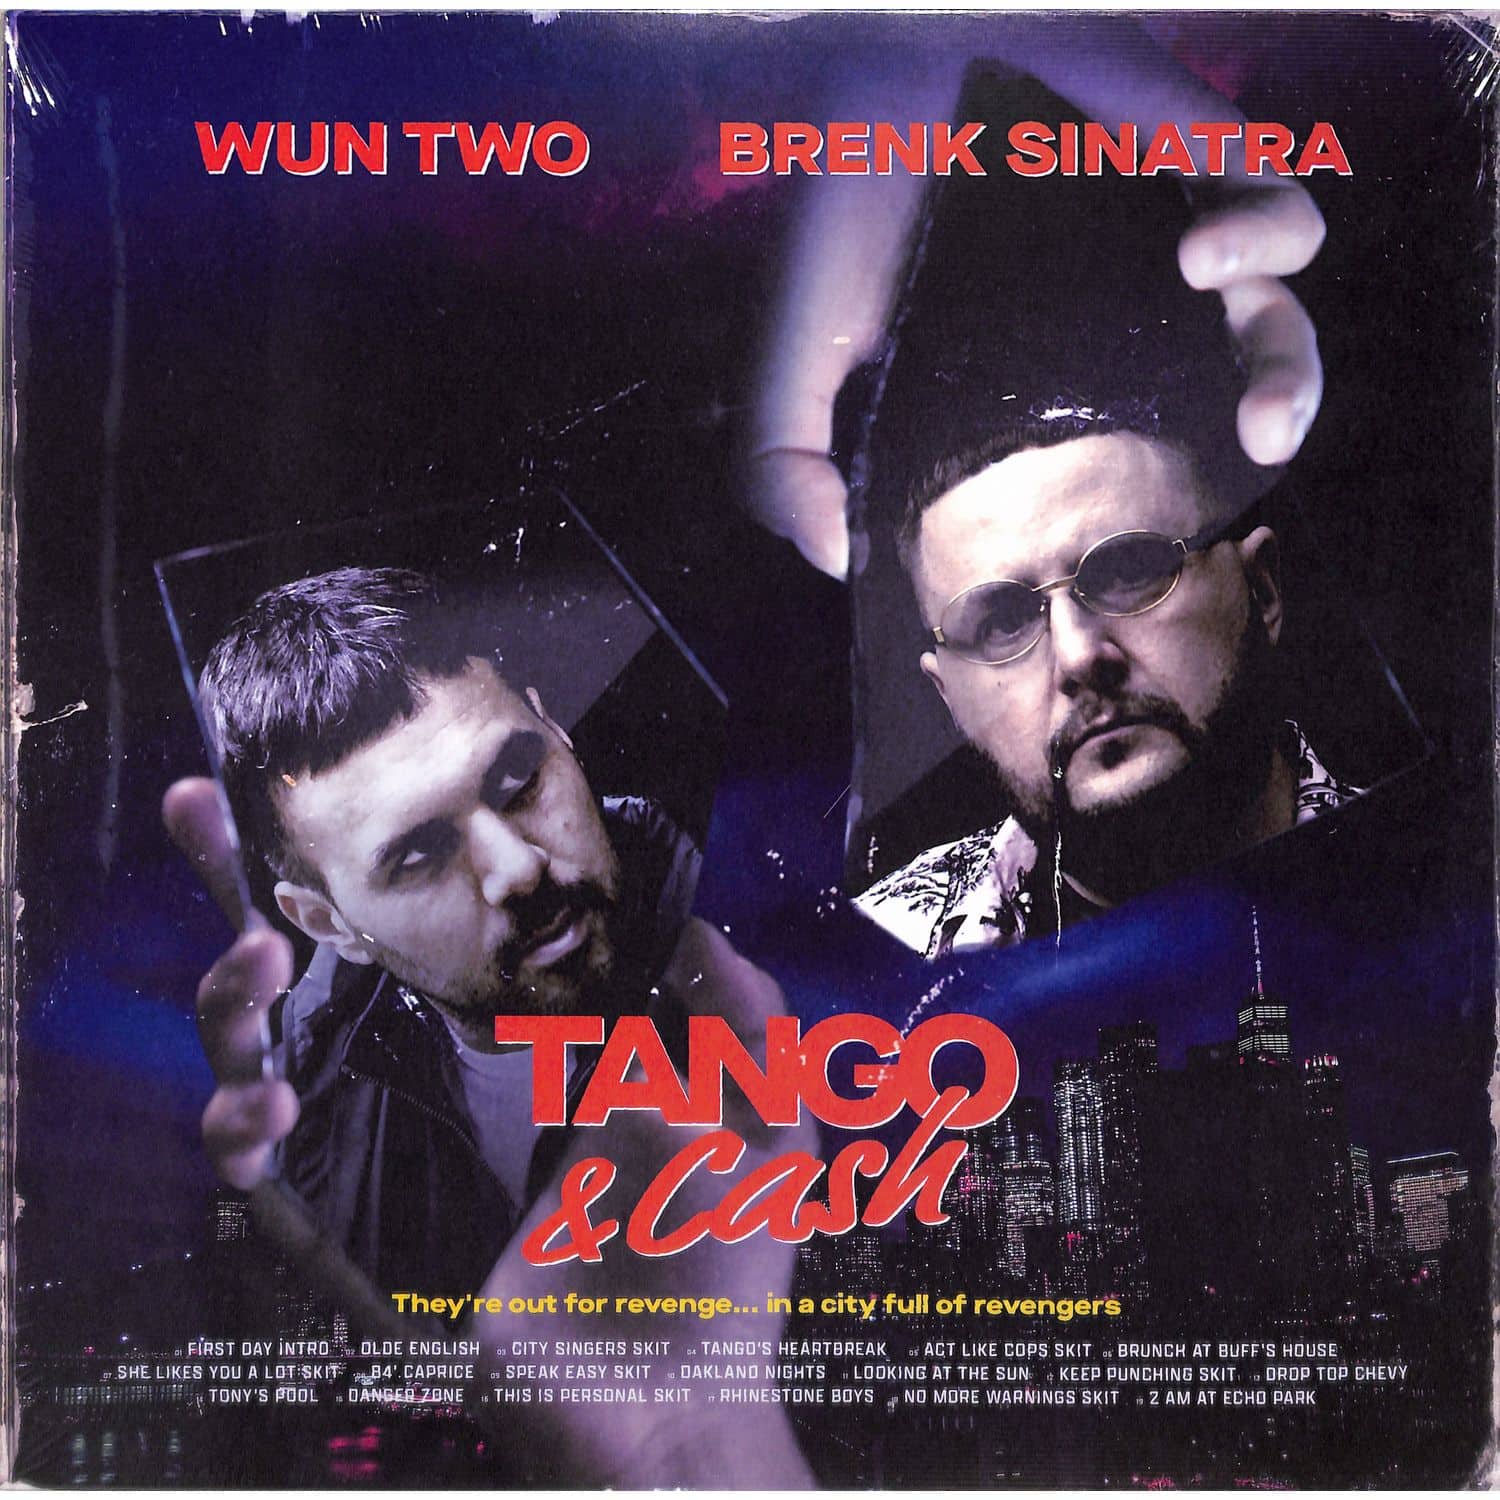 Brenk Sinatra & Wun Two - TANGO & CASH 